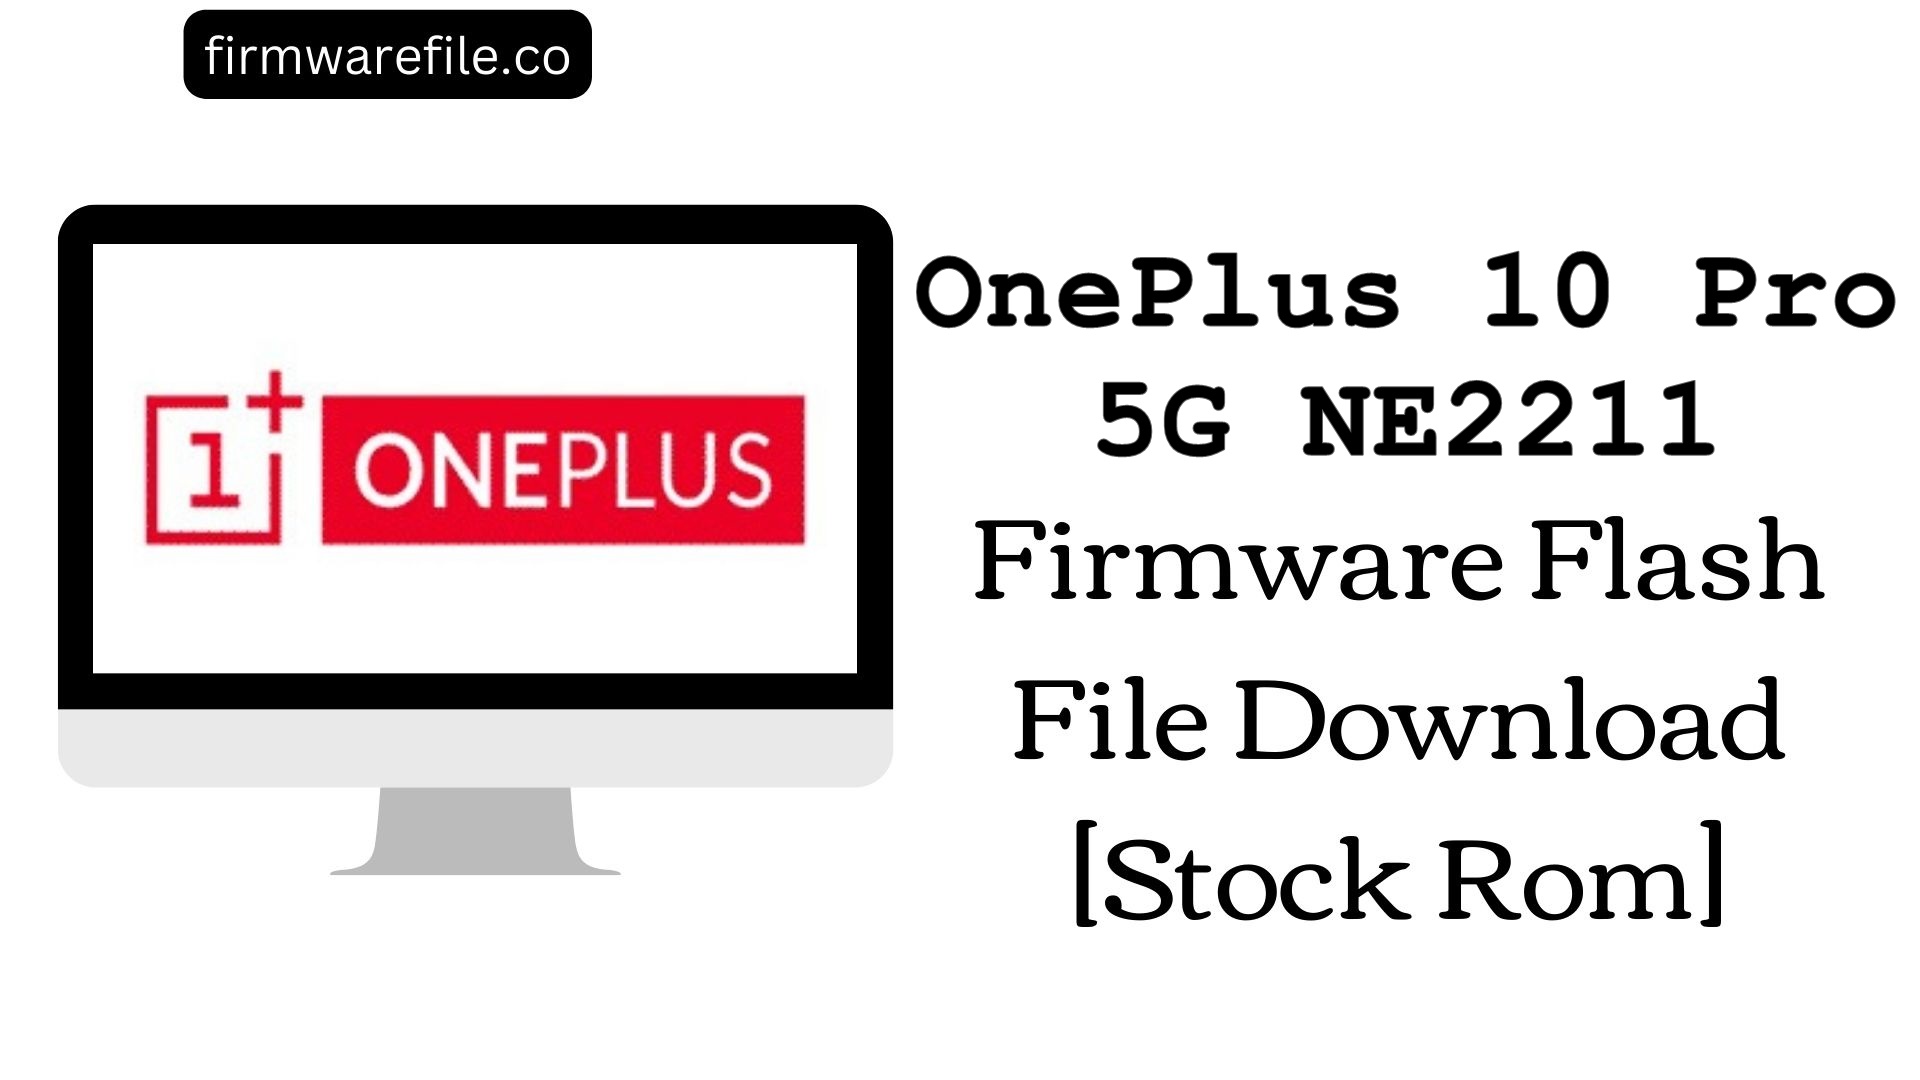 OnePlus 10 Pro 5G NE2211